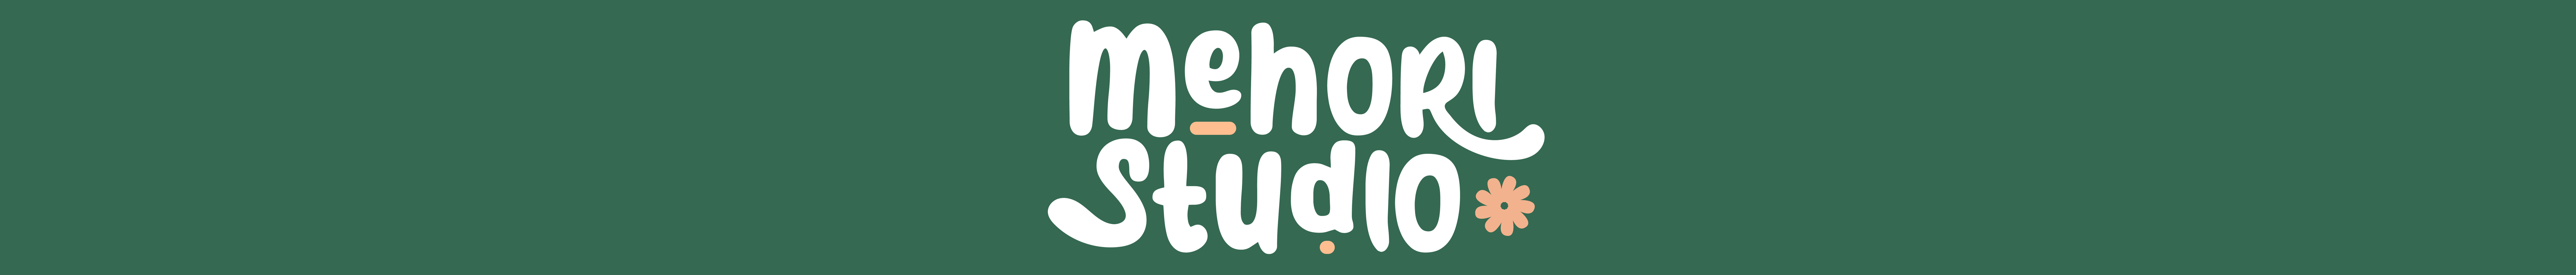 Banner de perfil de Mehori Studio